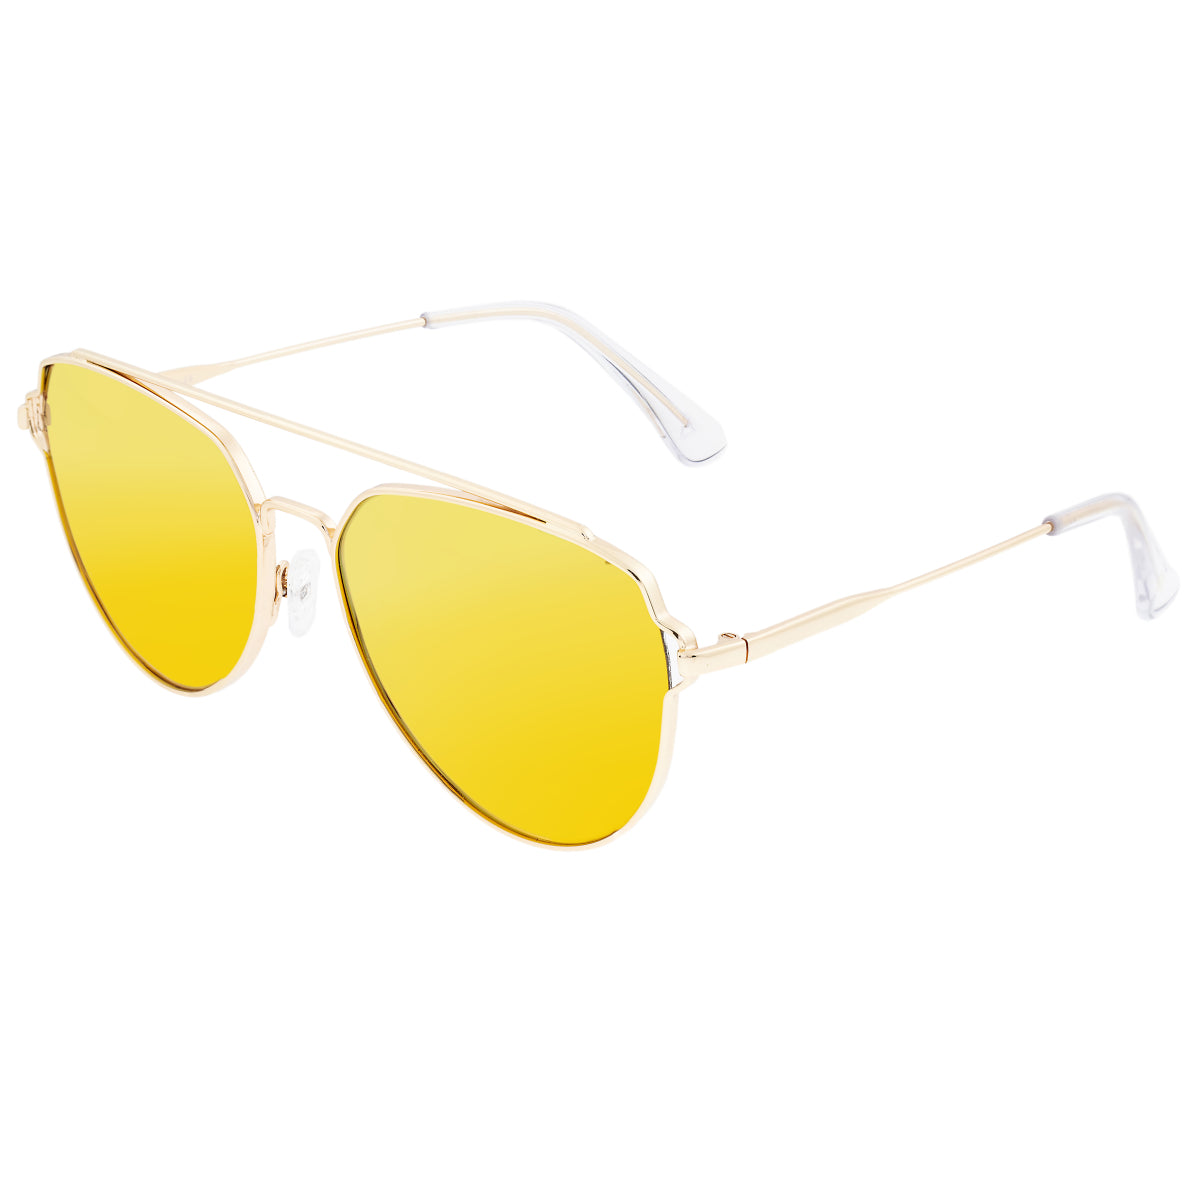 Sixty One Nudge Polarized Sunglasses - Gold/Yellow - SIXS106GD